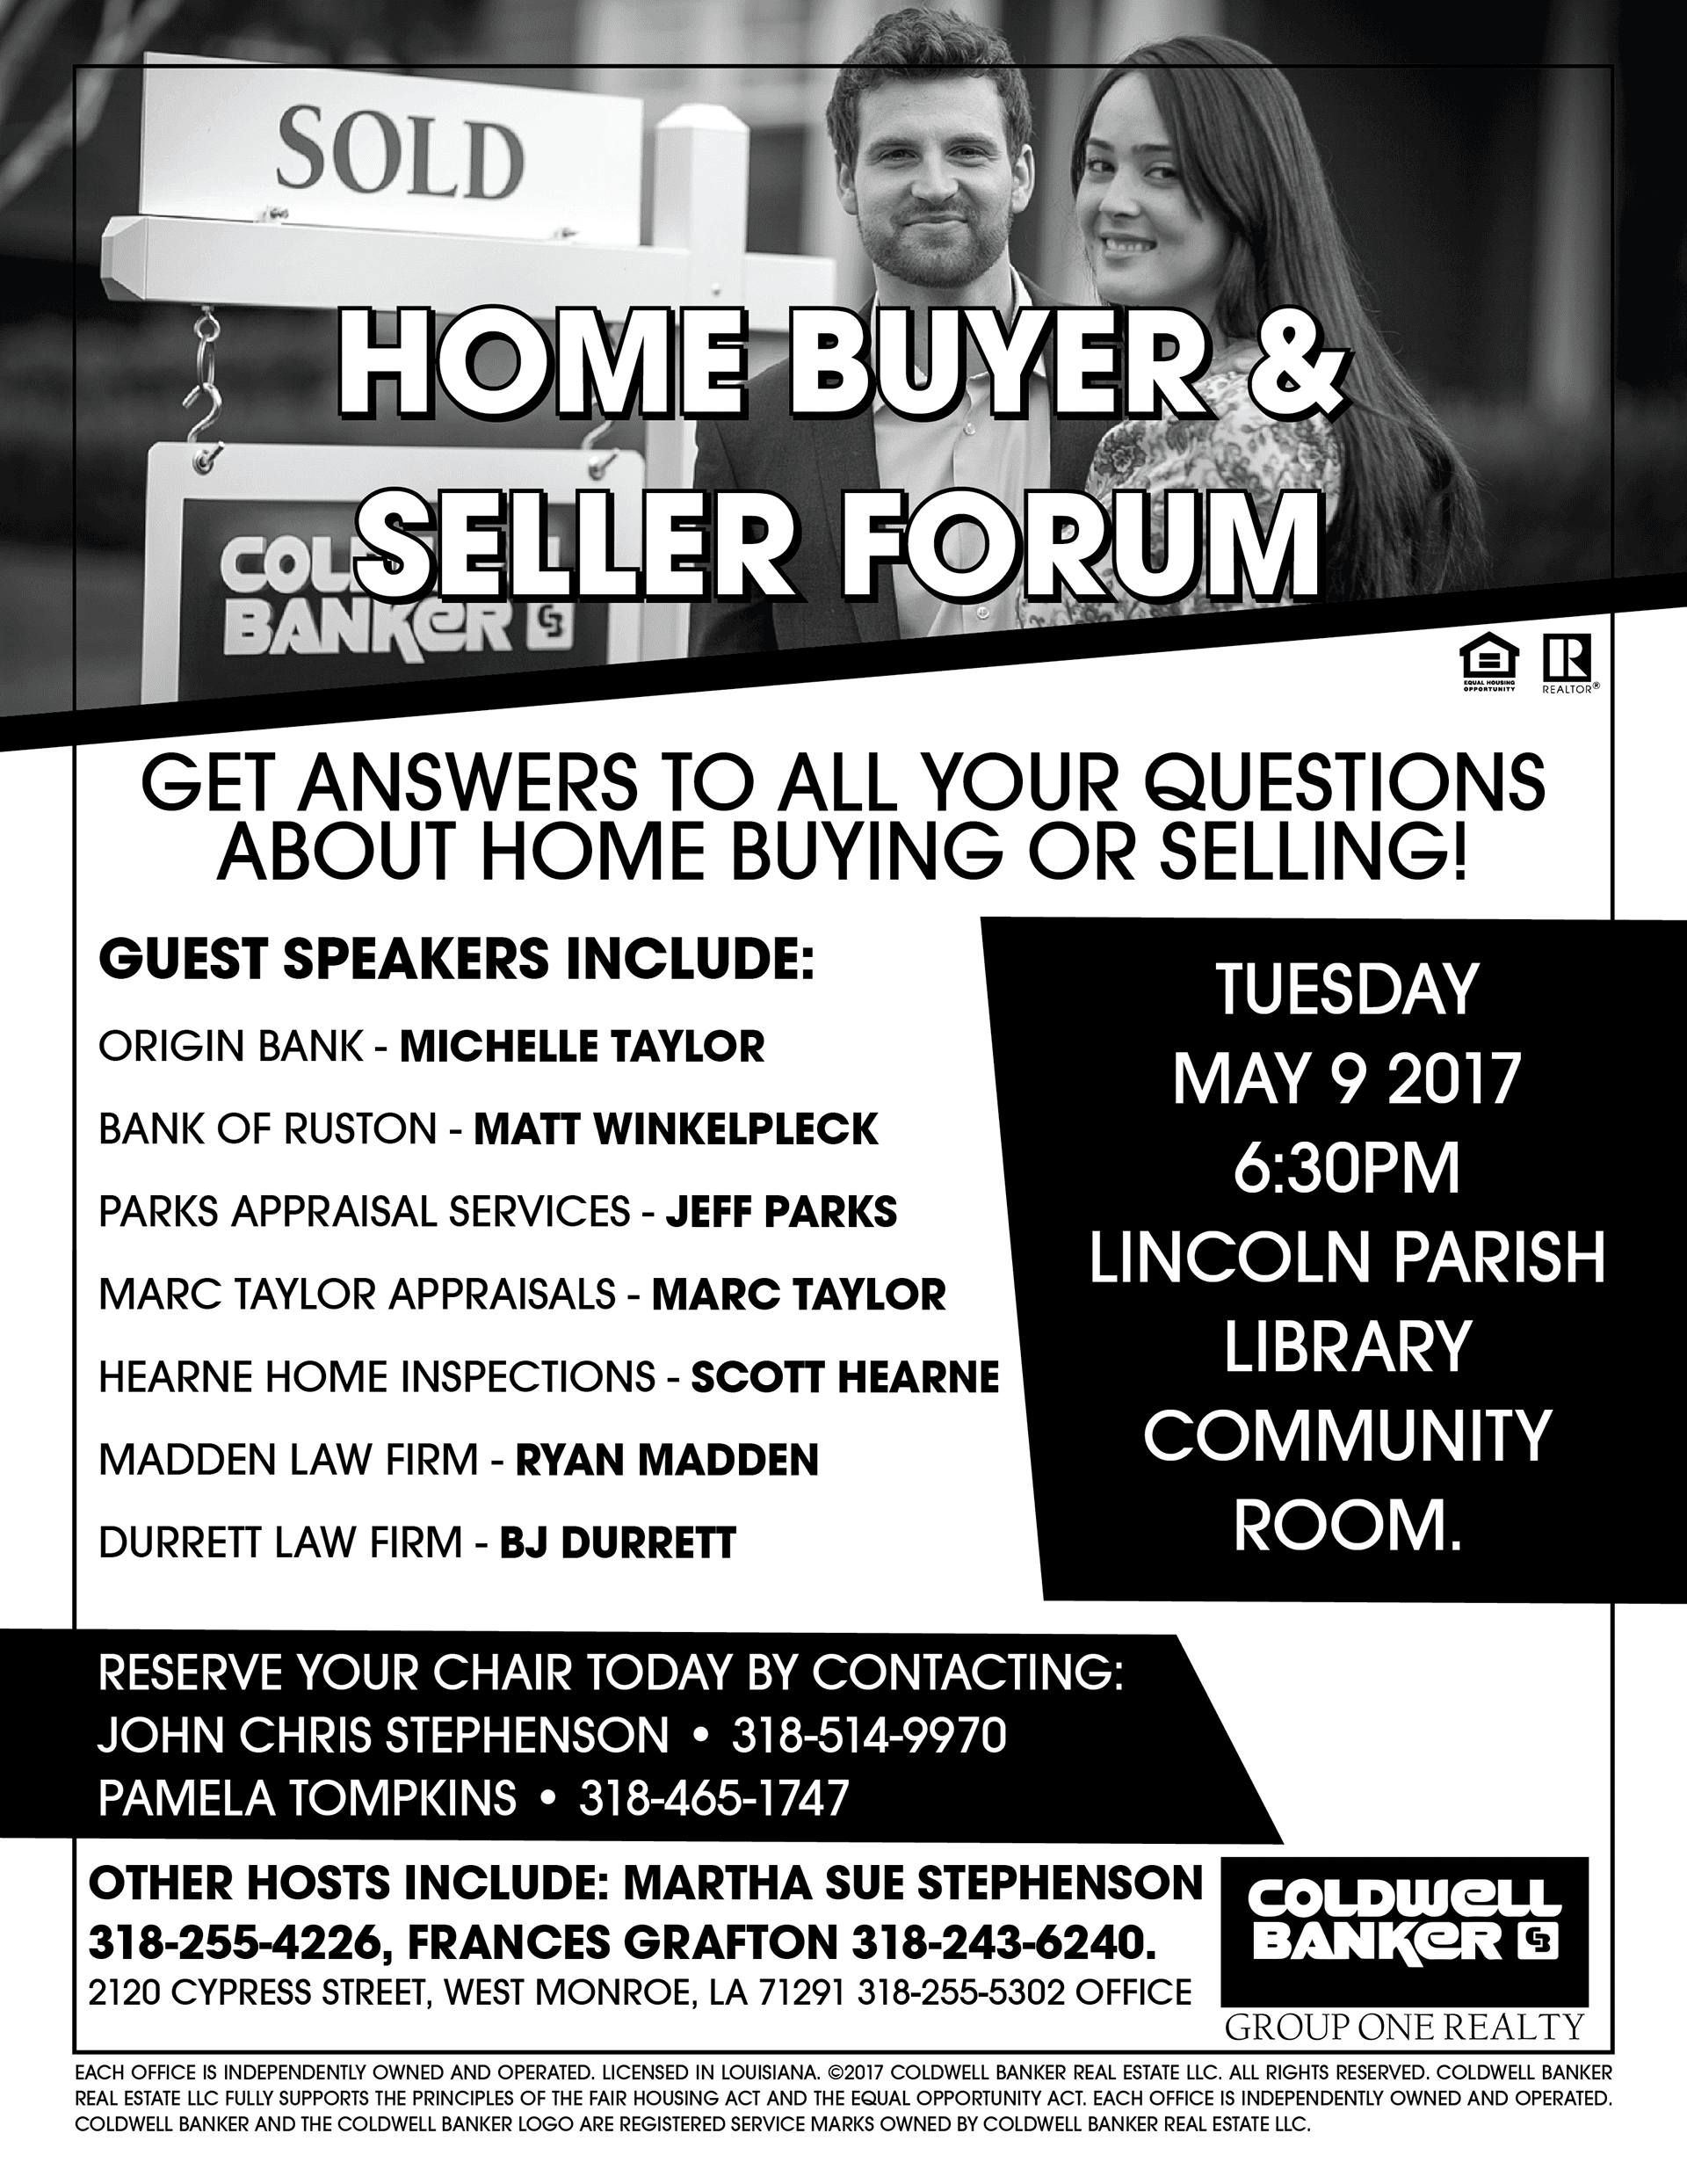 Home Buyer & Seller Forum Ruston, LA newspaper ad